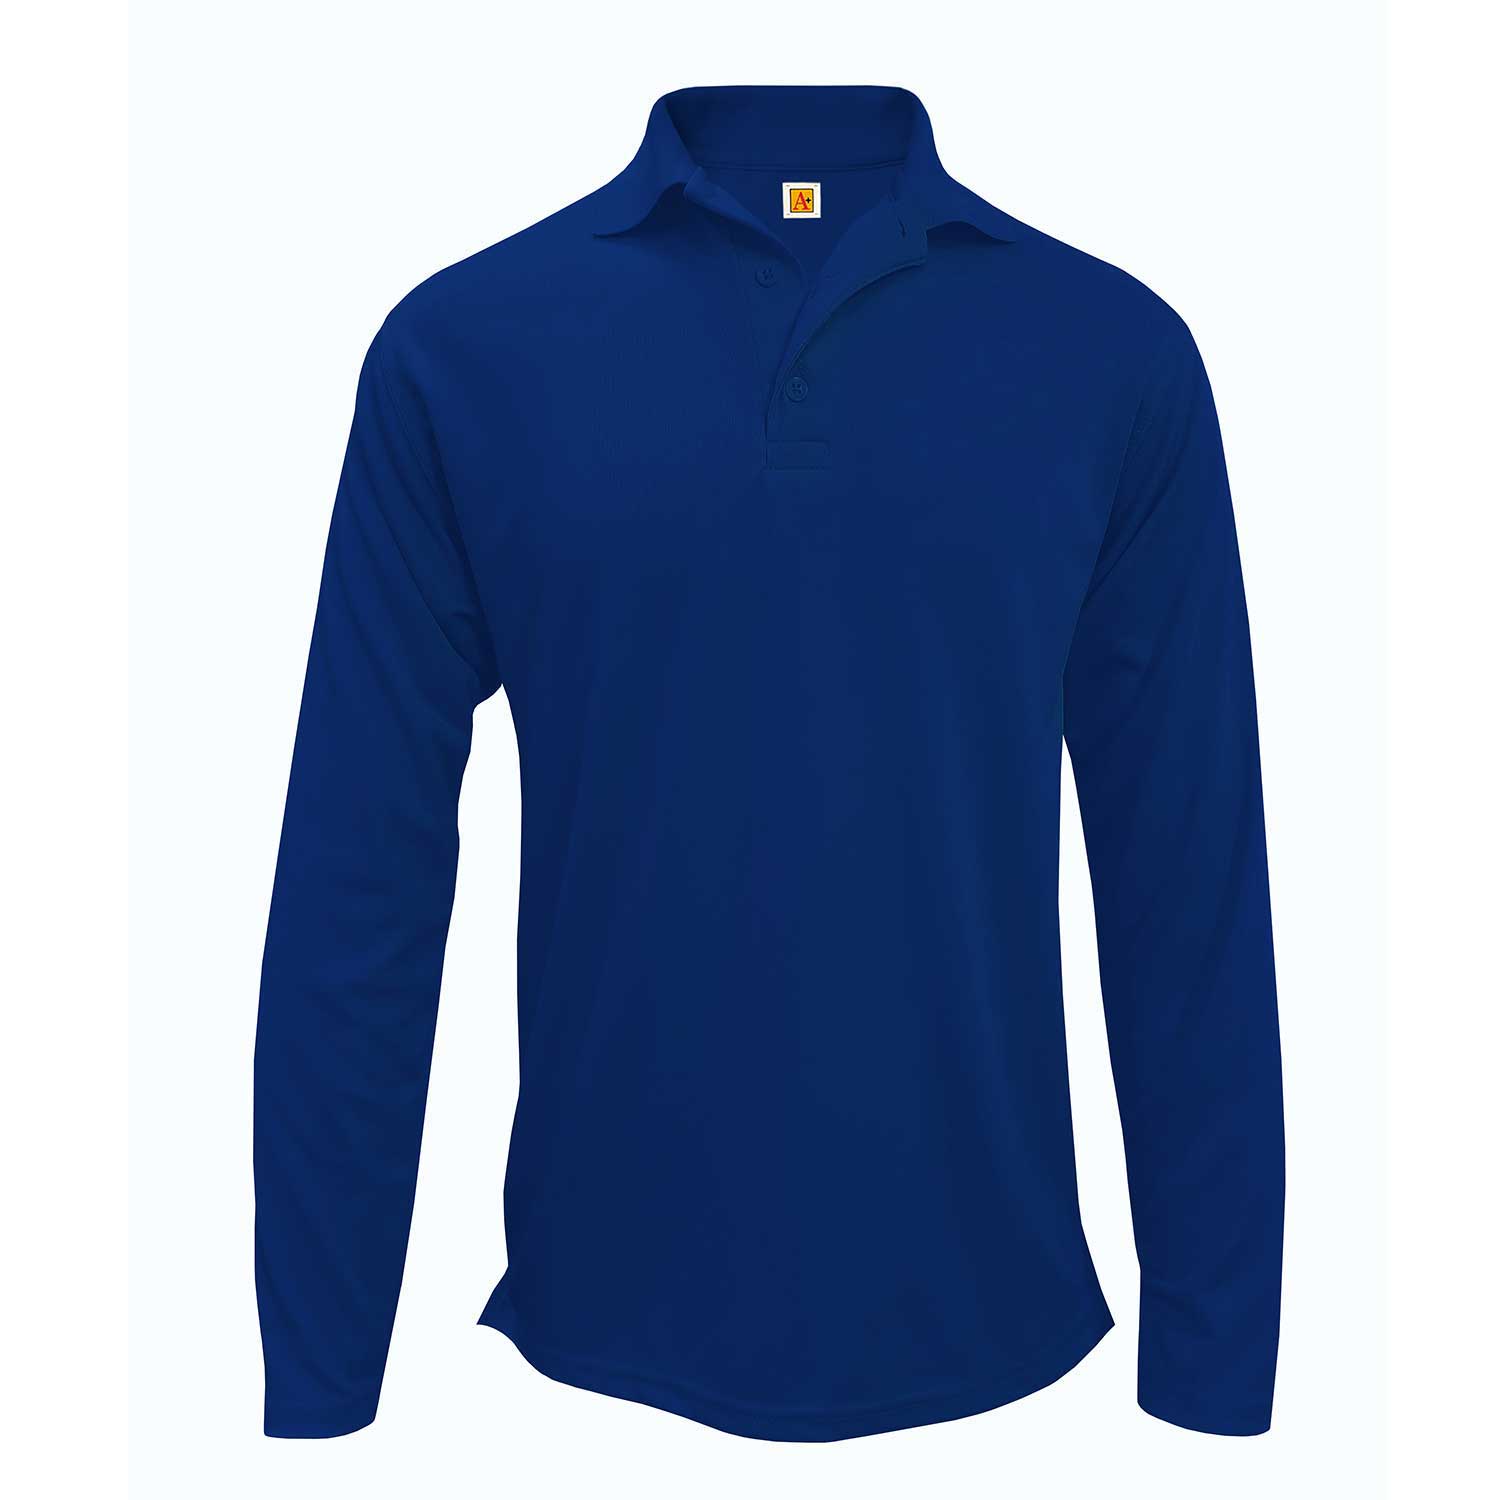 St. Pascal Regional Catholic School - Unisex Performance Knit Polo Shirt - Moisture Wicking - 100% Polyester - Long Sleeve